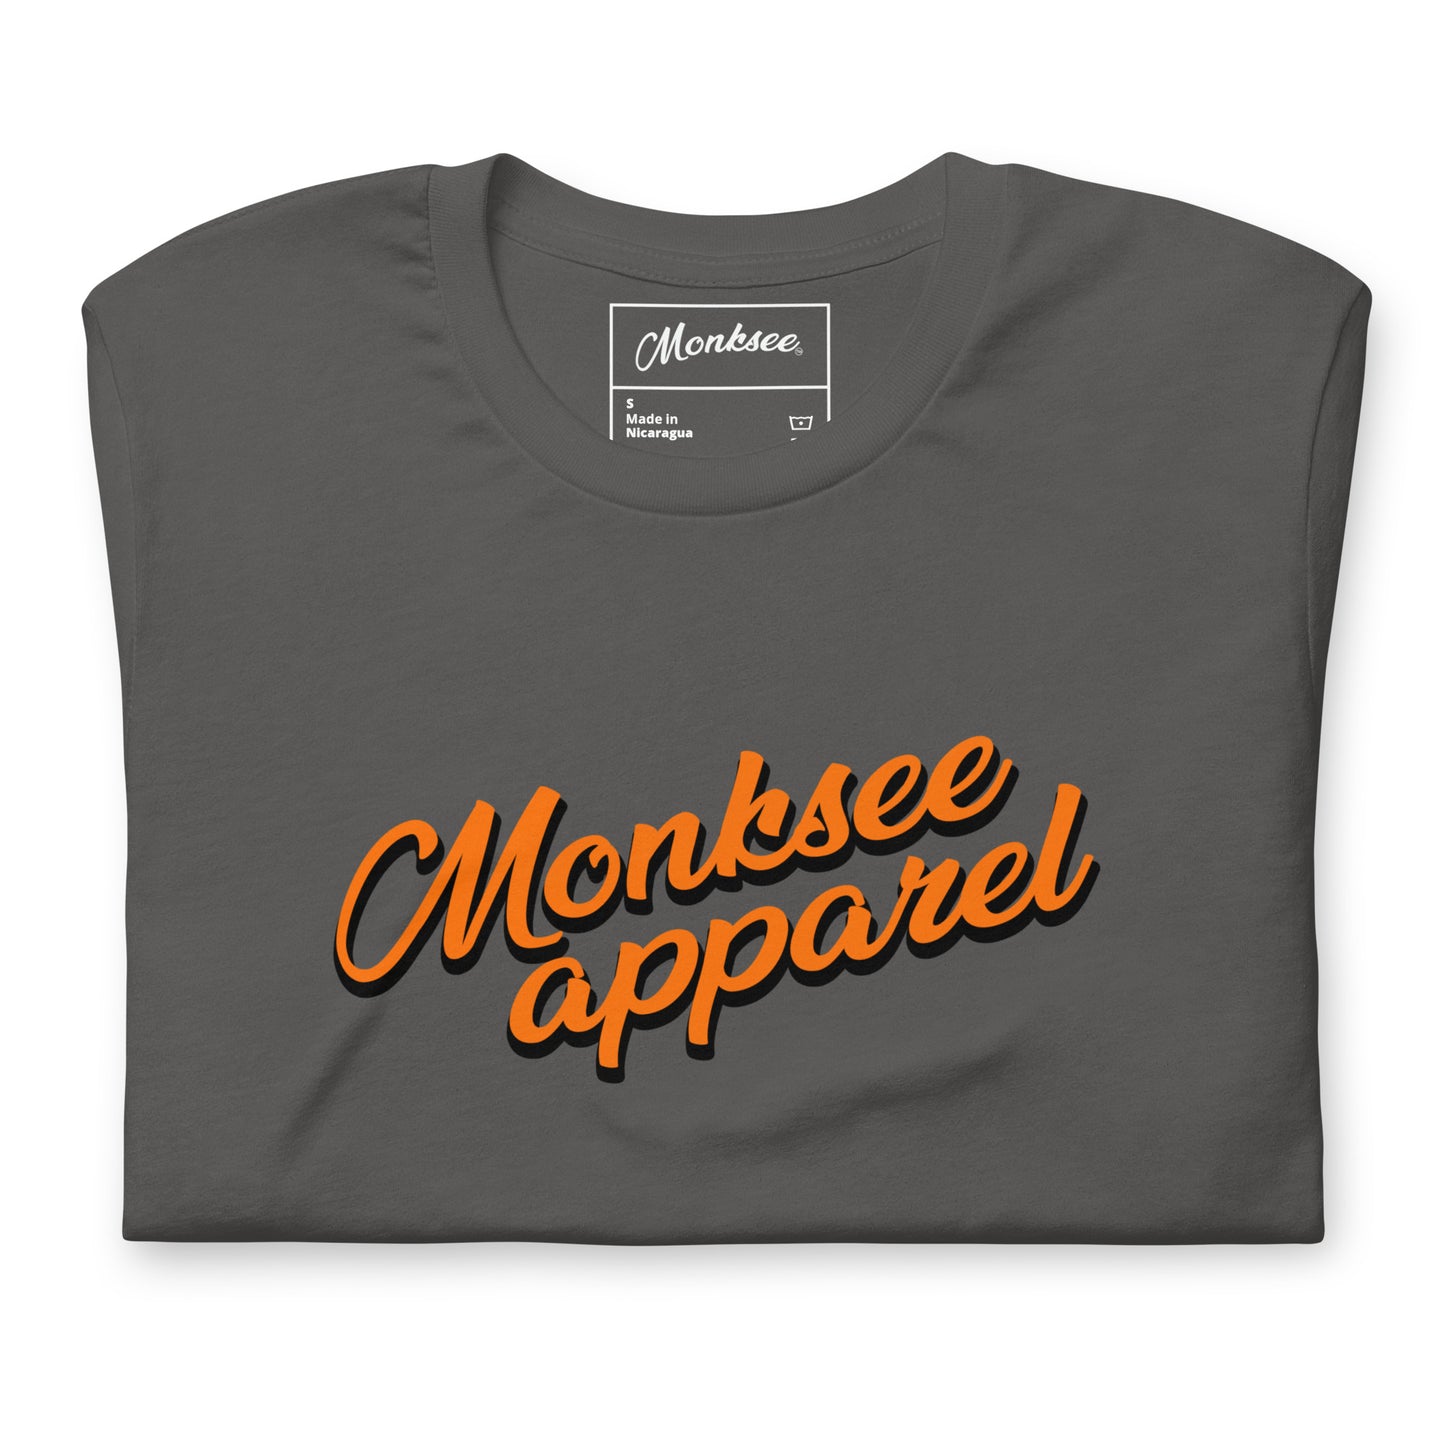 Monksee Apparel t-shirt.